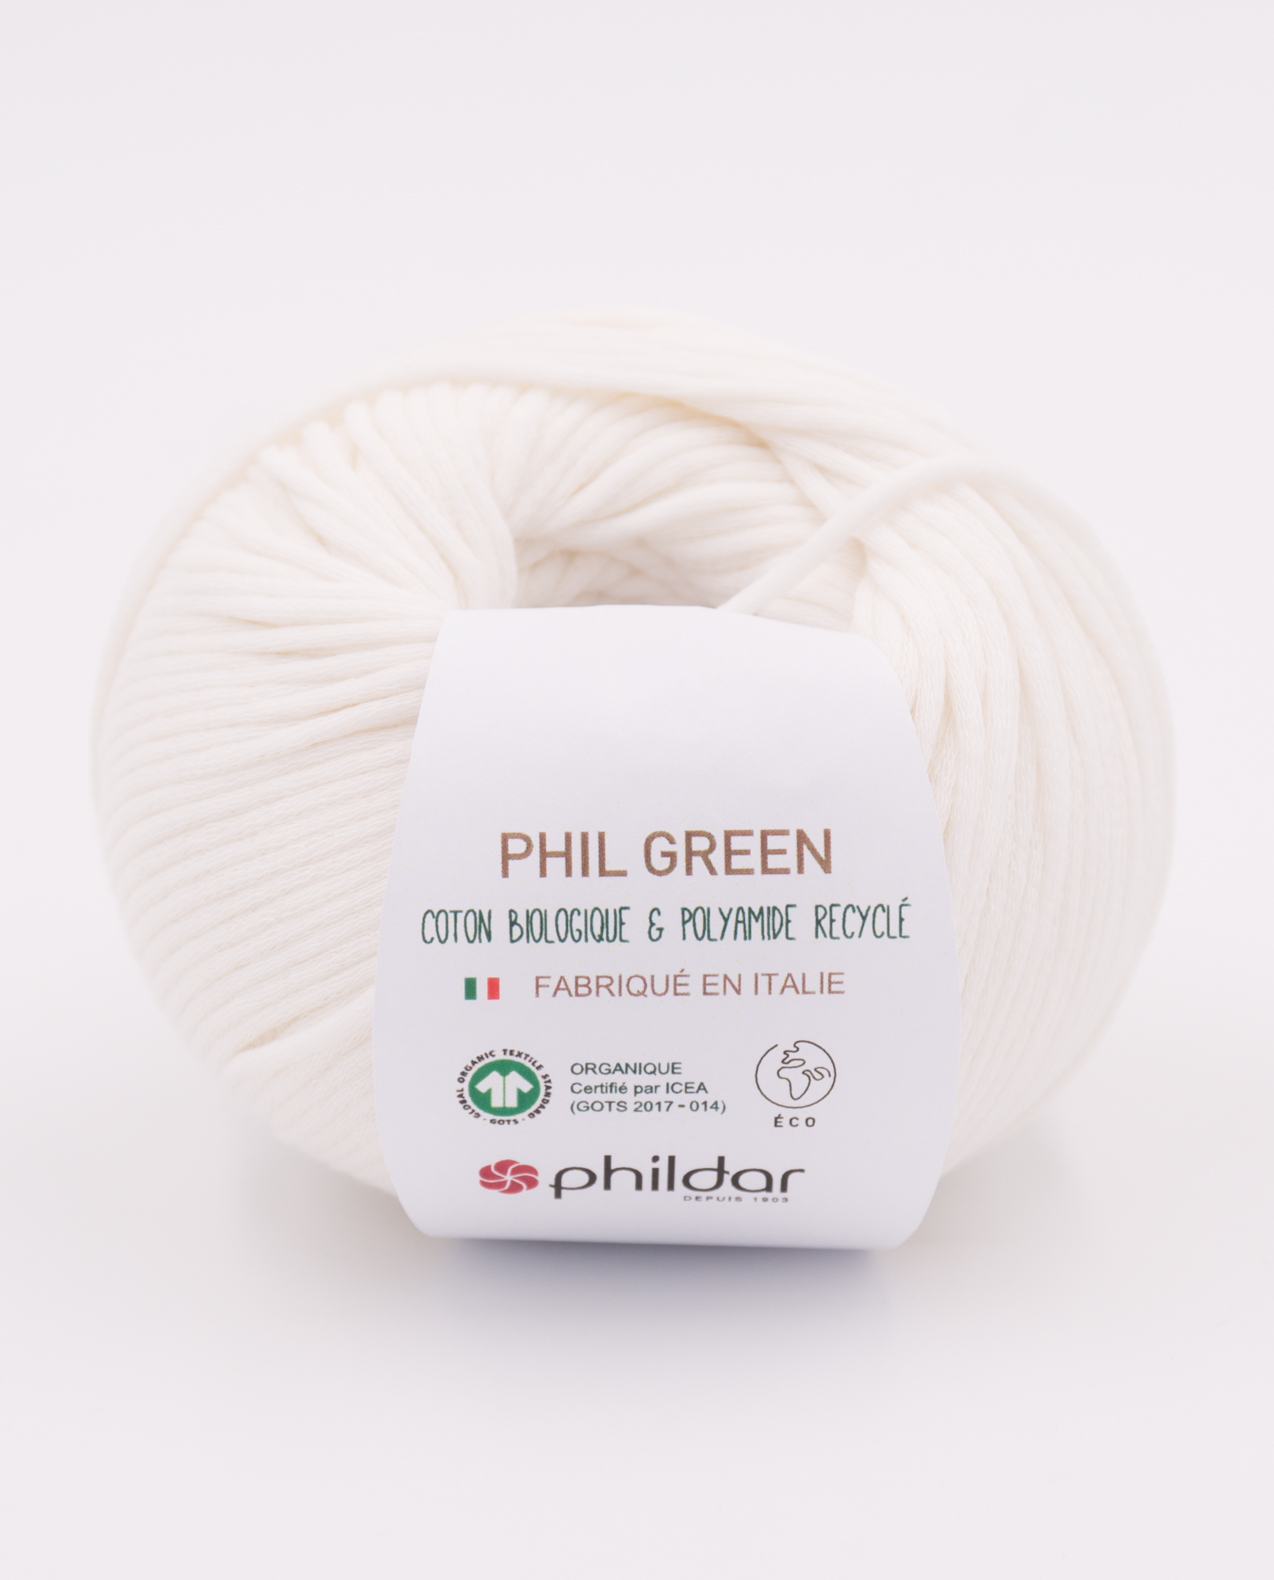 Phildar Phil Green kleur 1225 Blanc